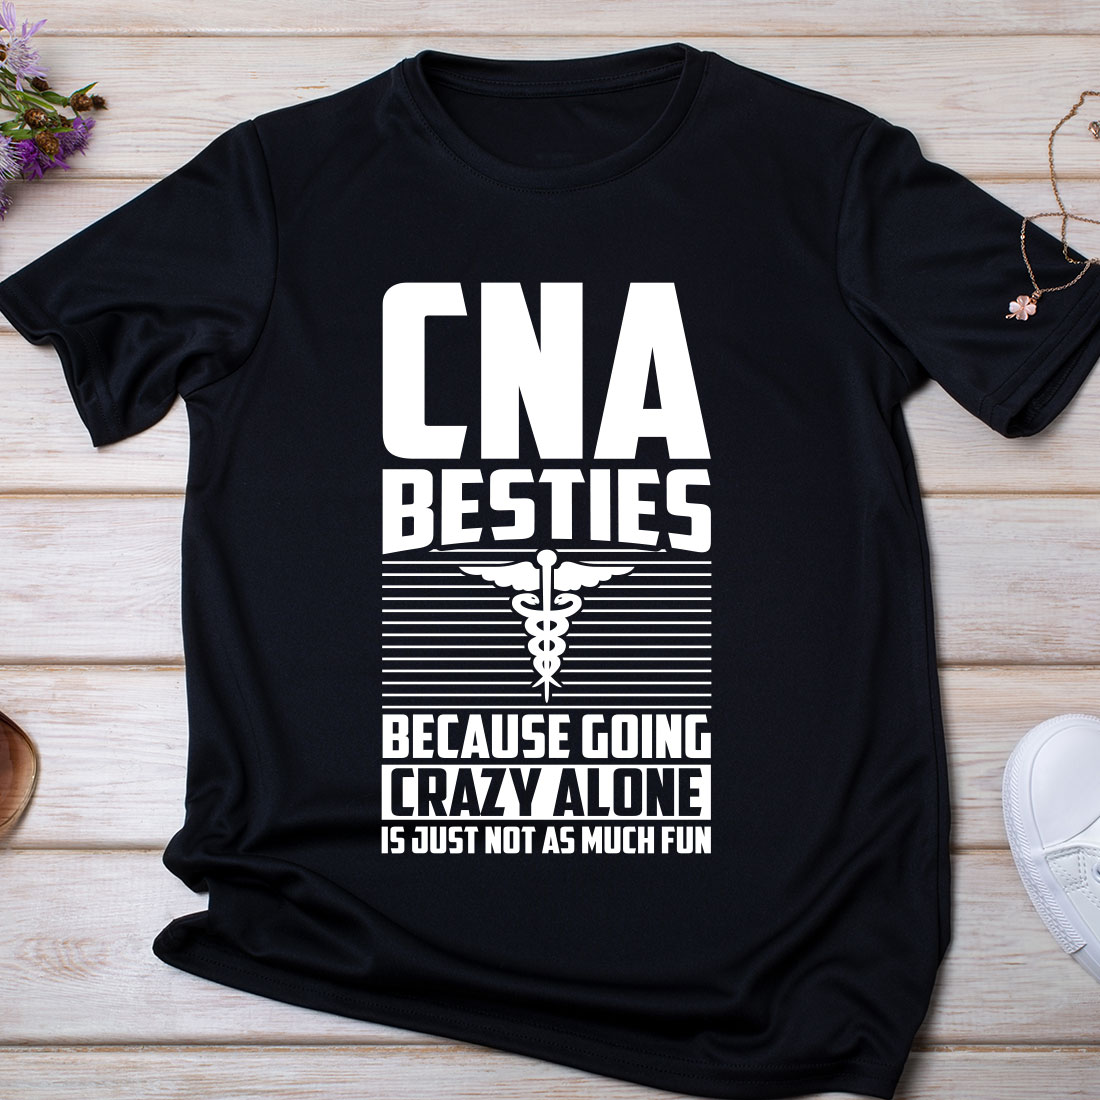 Funny CNA Besties Healthcare Worker Nurse T shirt Design preview image.